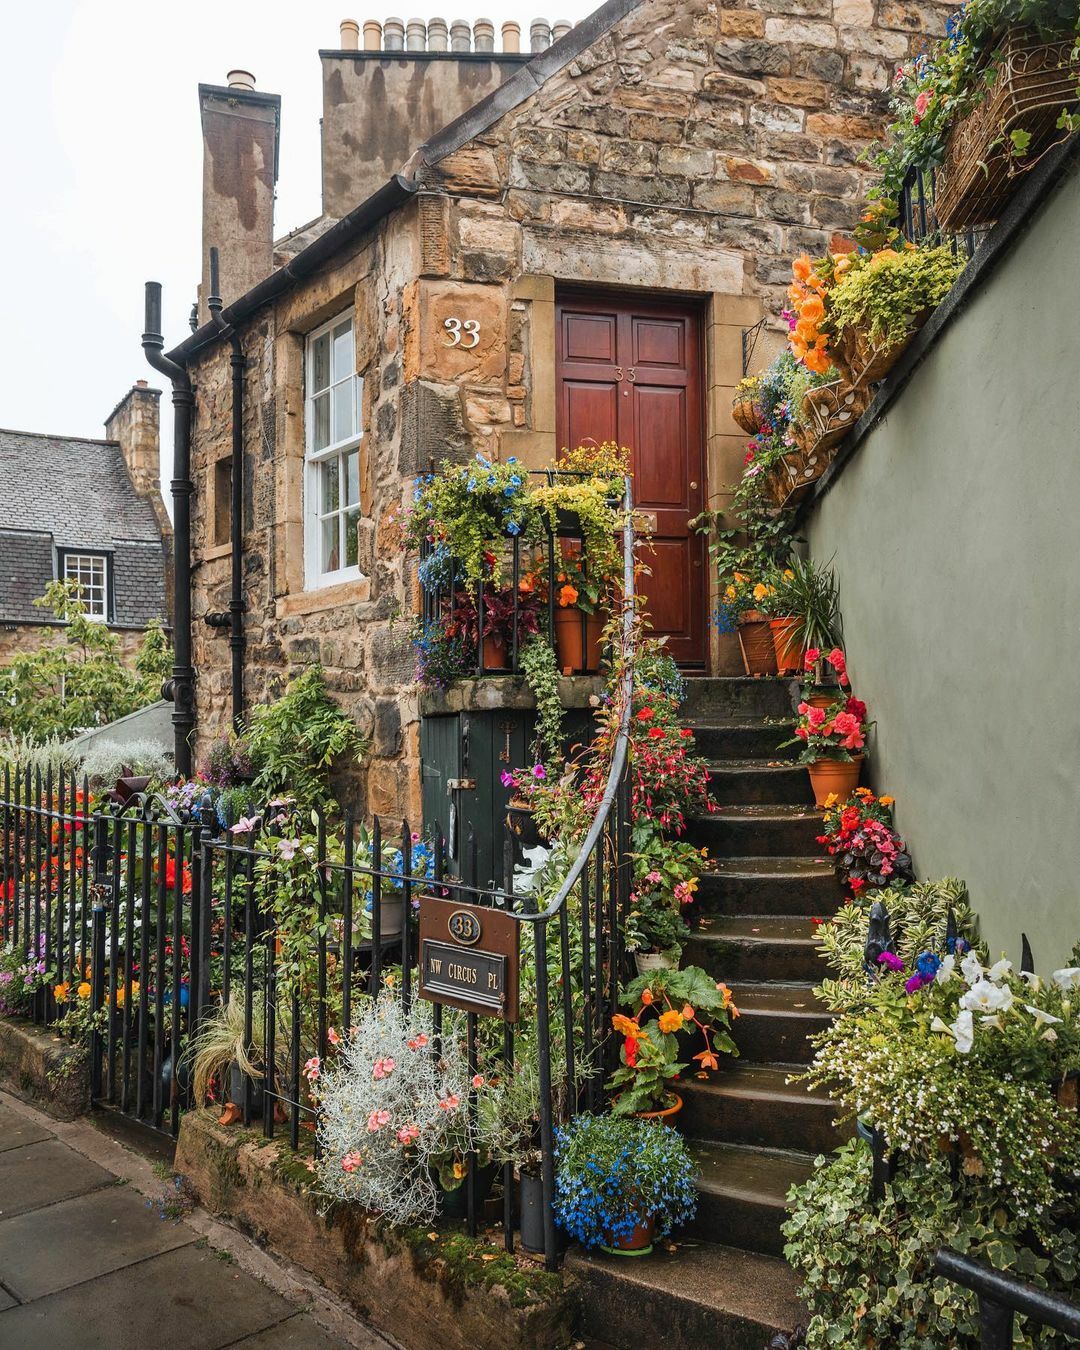 This Small Stone House In Edinburgh, Scotland